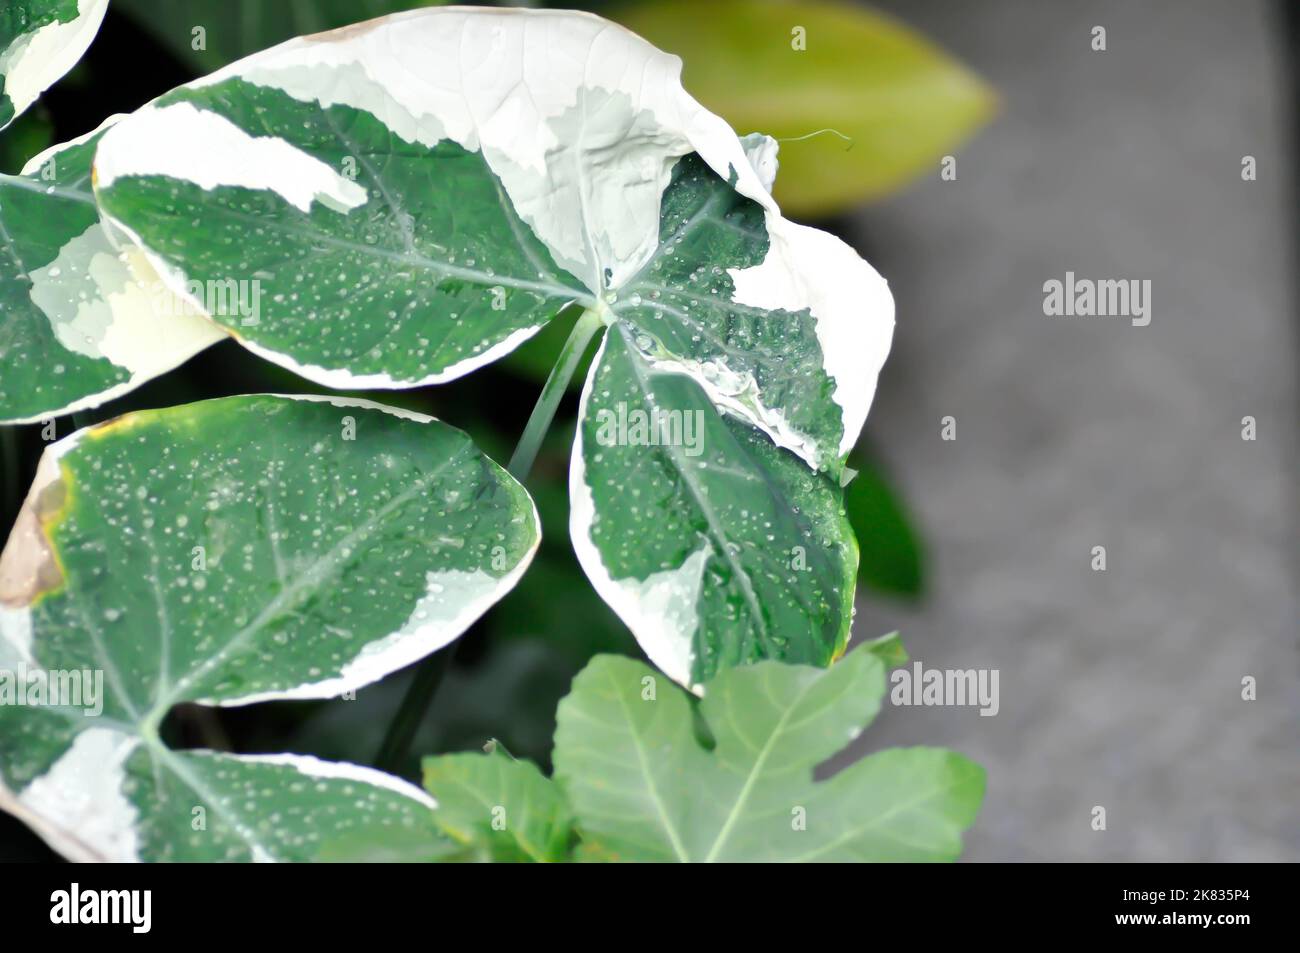 Albomarginata, Araceae or Schott or Xanthosoma sagittifolium or XANTHOSOMA or Mickey Mouse Plant and rain drop or dew drop Stock Photo